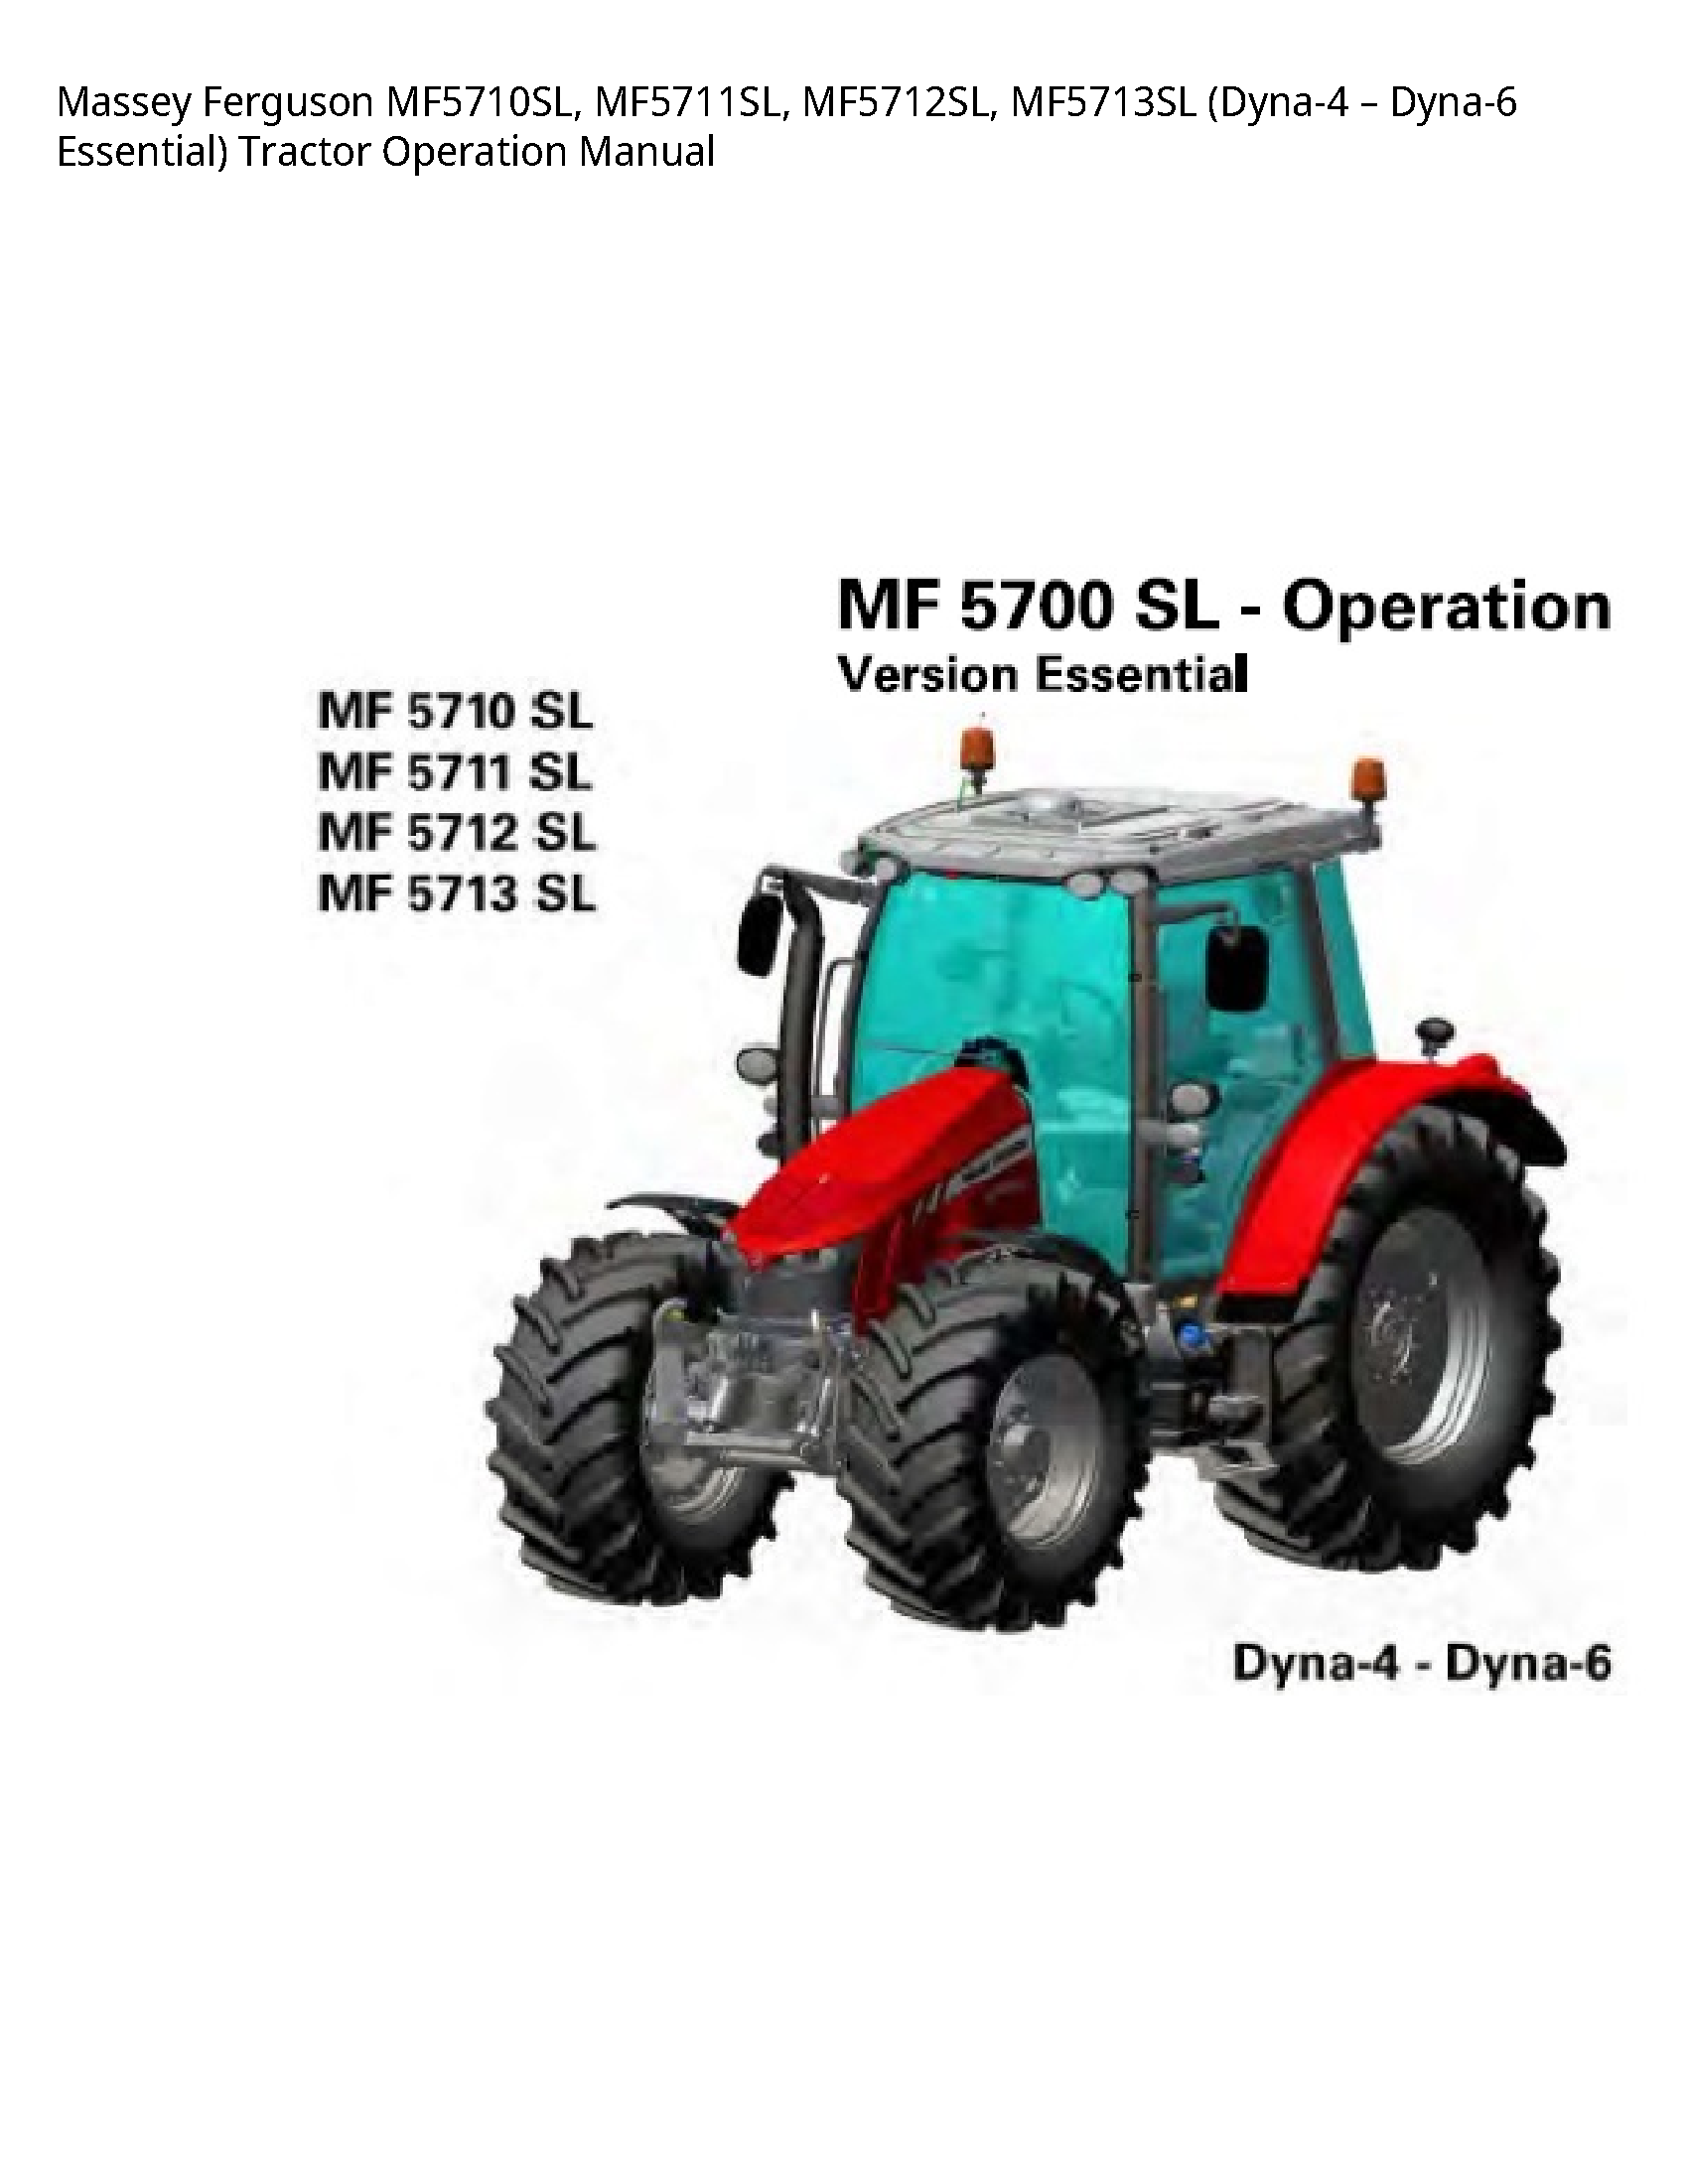 Massey Ferguson MF5710SL Essential) Tractor Operation manual